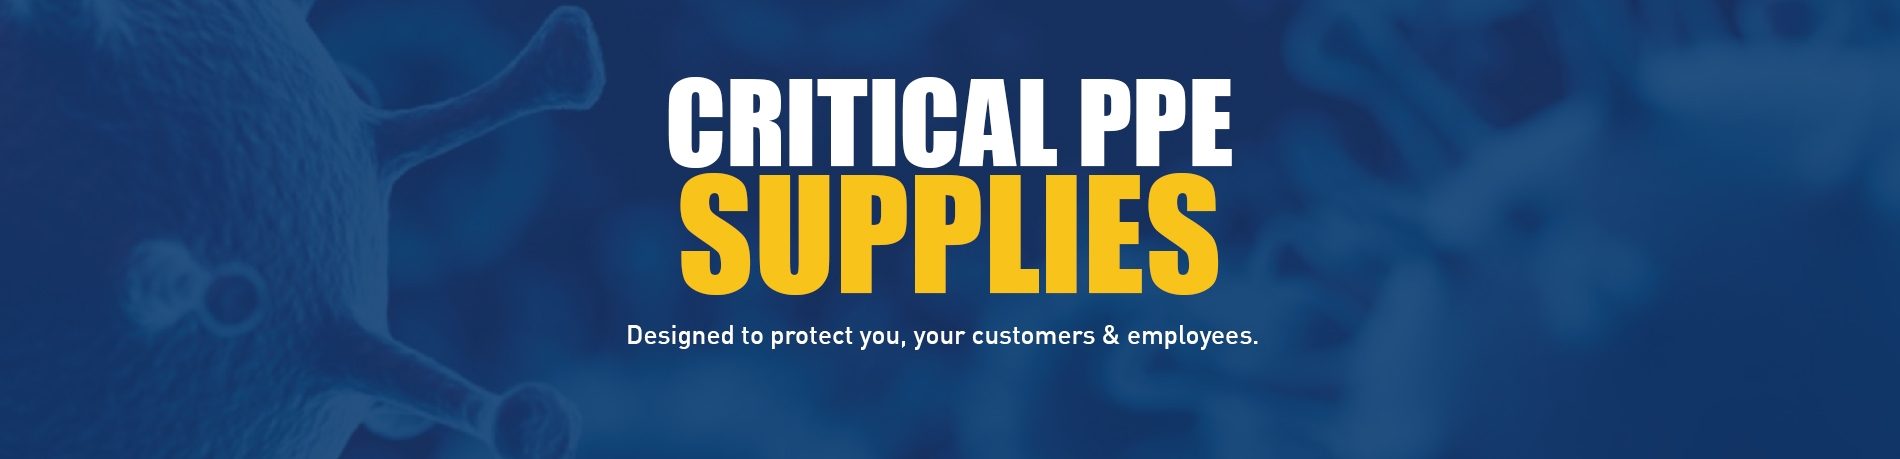 Critical PPE Supplies